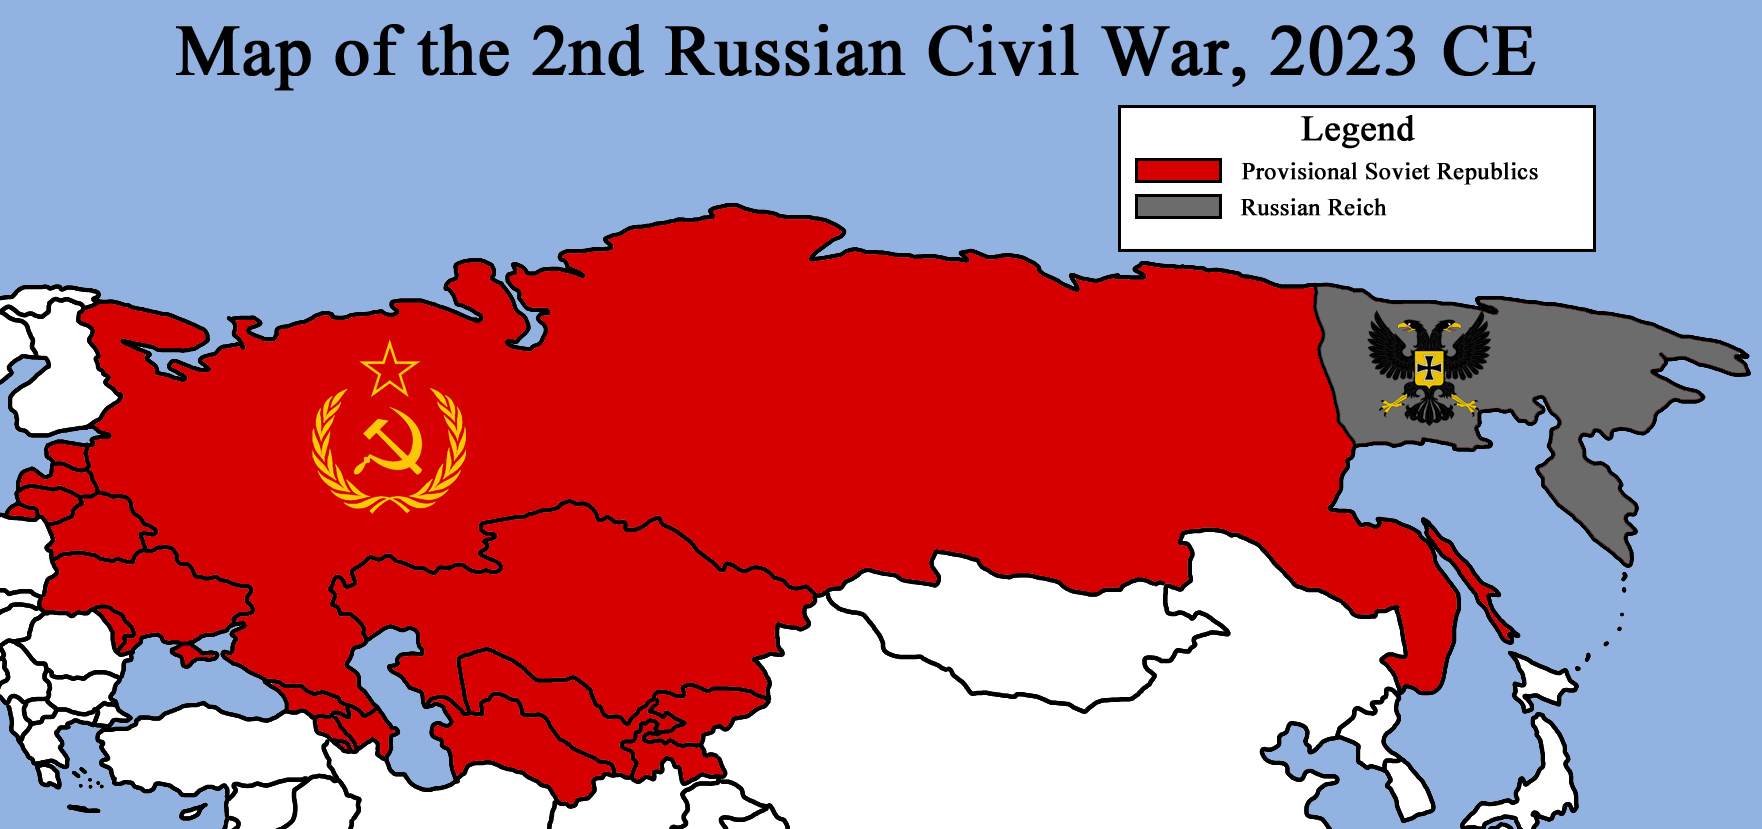 Map of the 2nd Russian Civil War, 2023 CE by RedRich1917 on DeviantArt